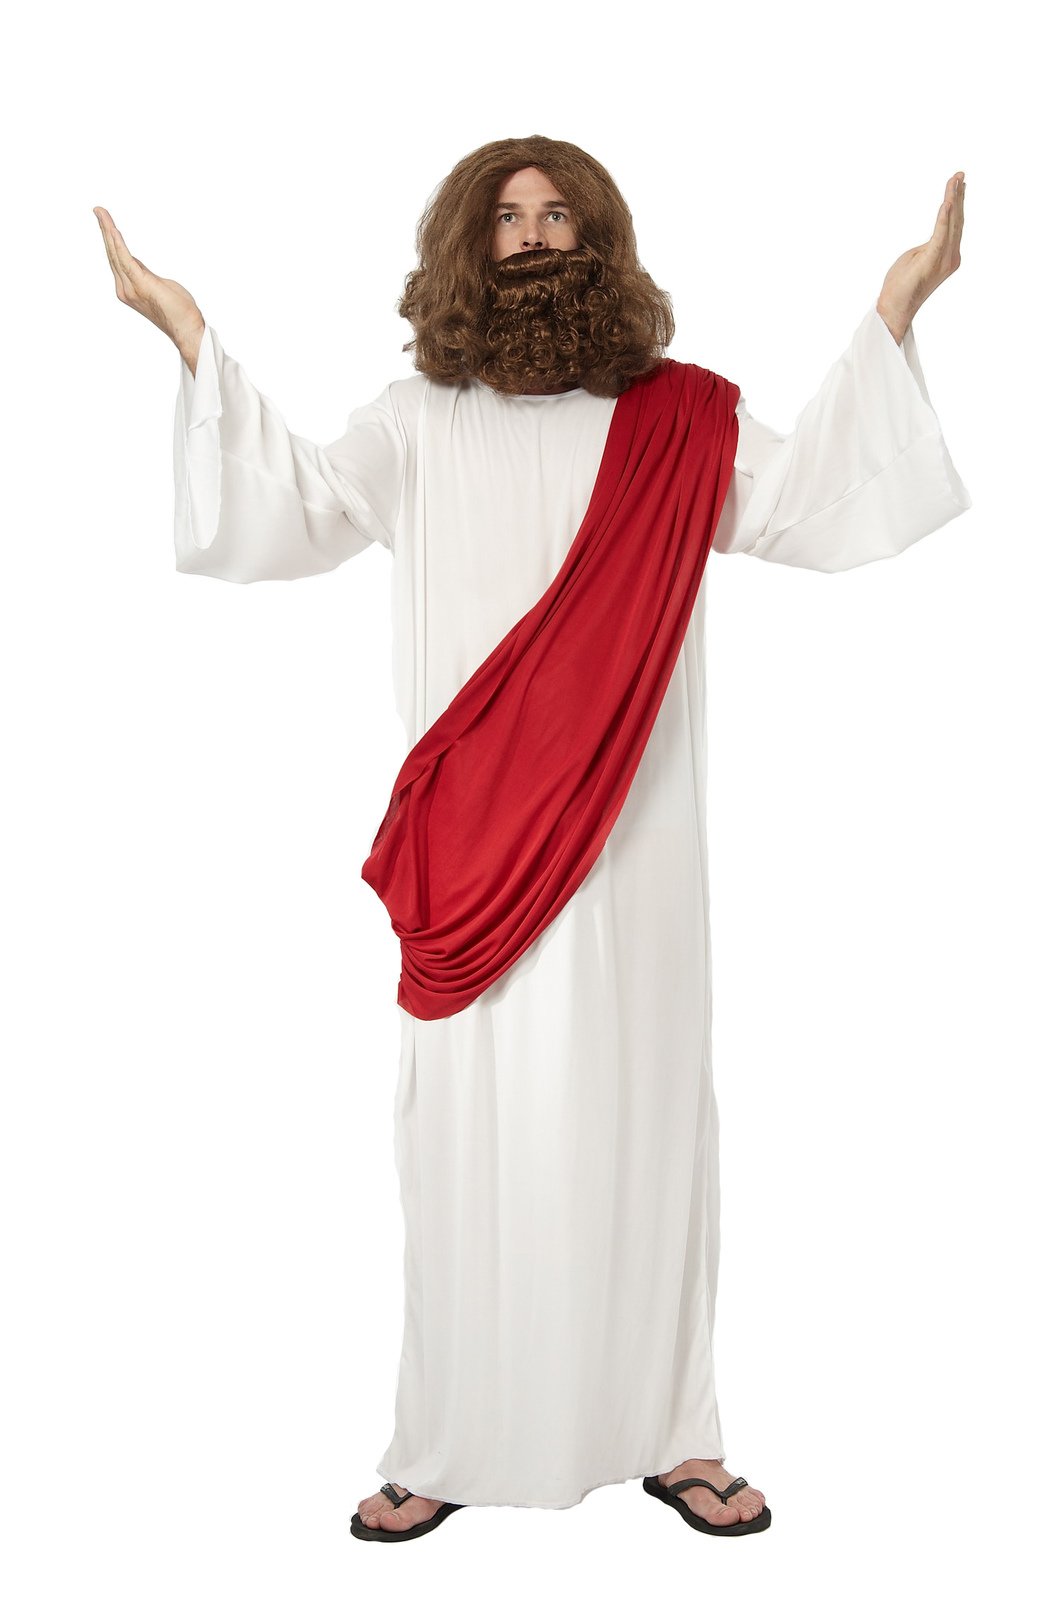 Costume Holyman Jesus Robe Adult Medium (Beard & Wig Not Included)